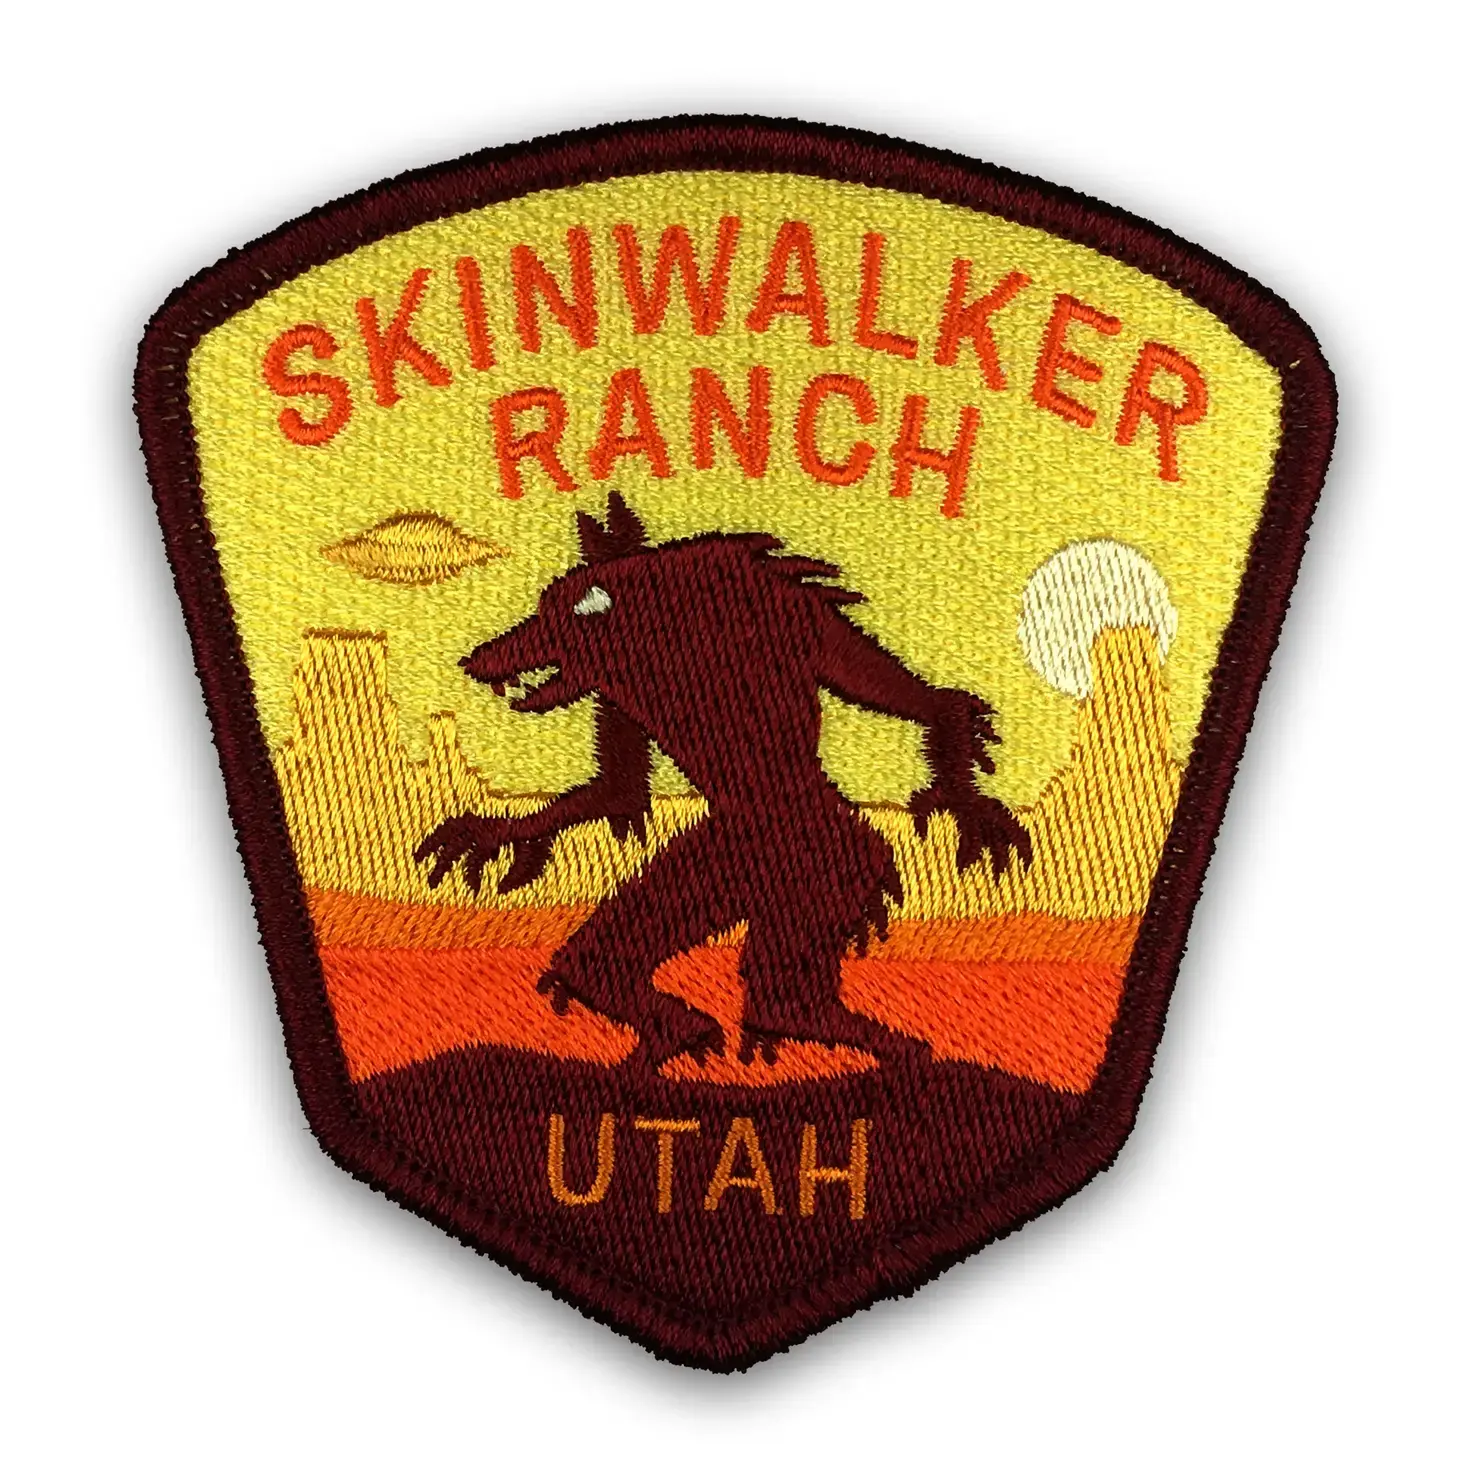 Skinwalker Ranch, Utah Travel Patch - Iron-on